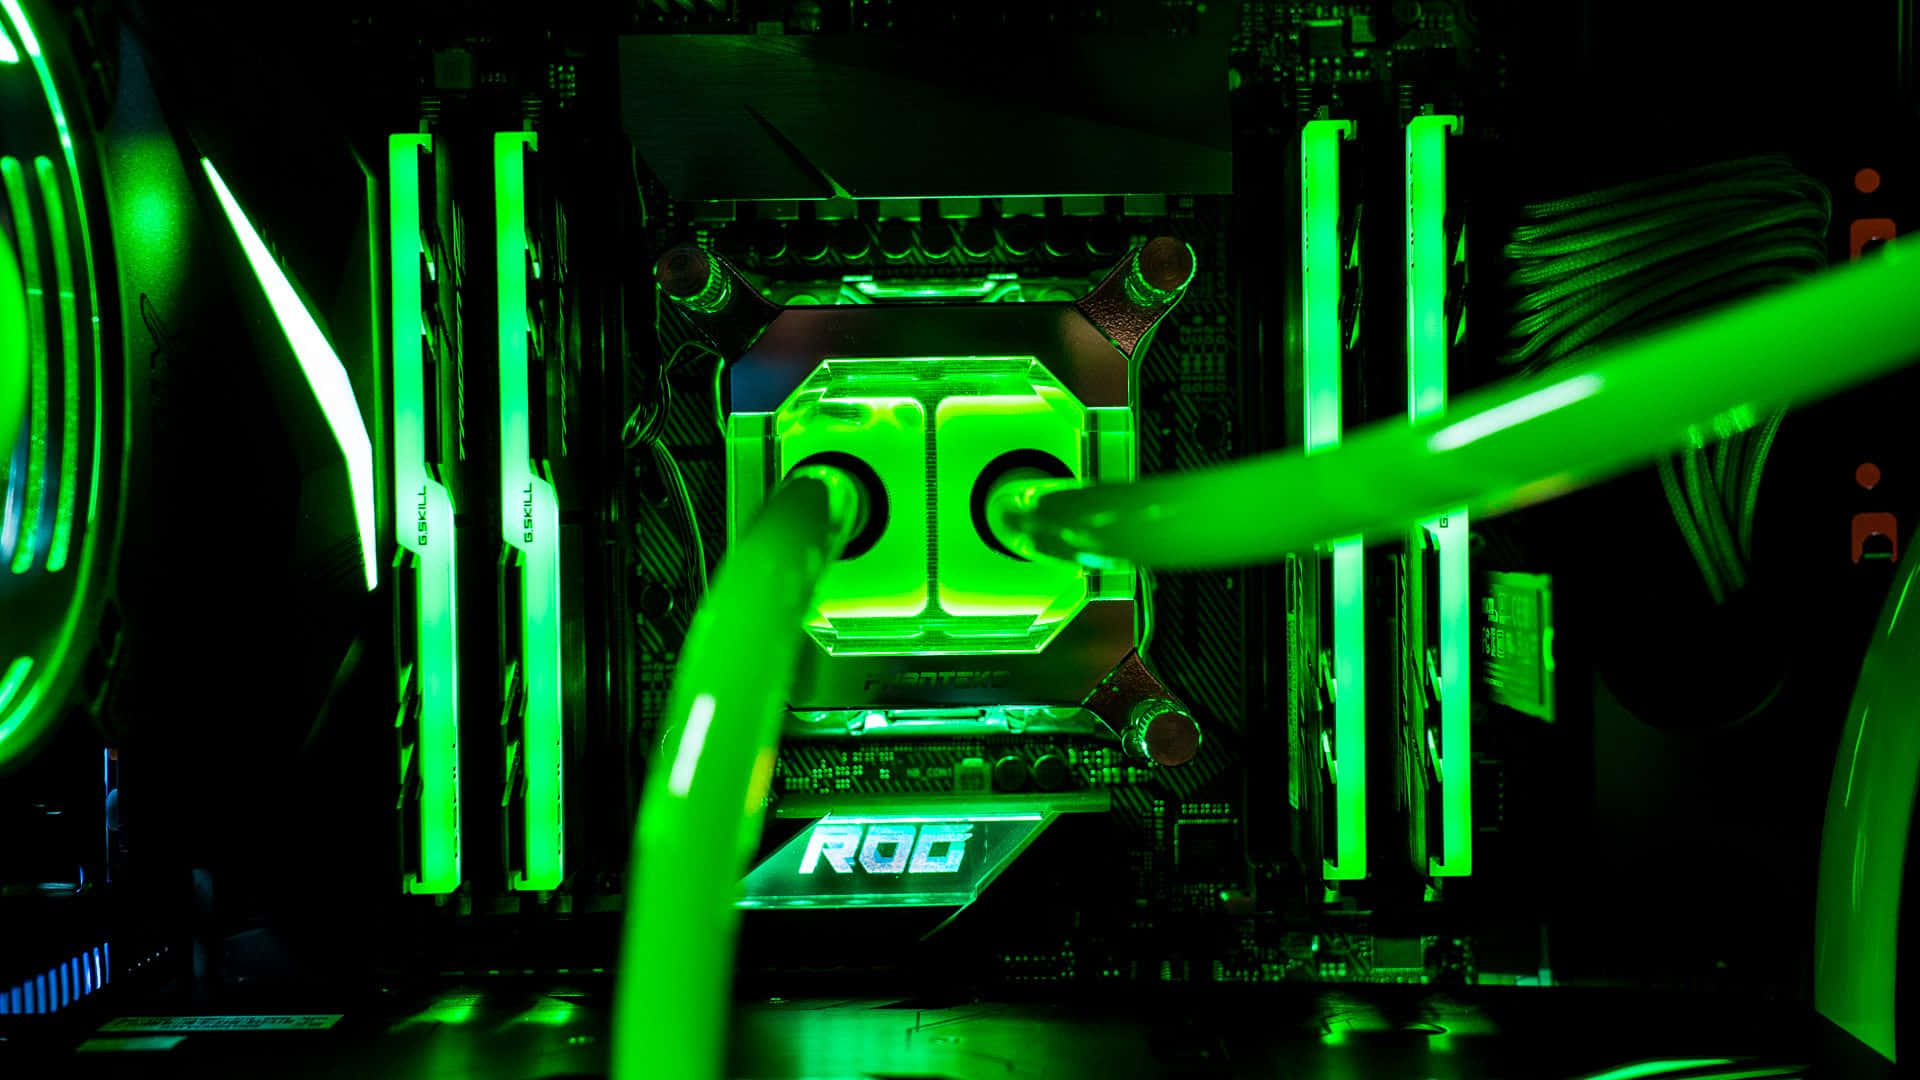 Estetiskagröna Neon Rog-bilder.